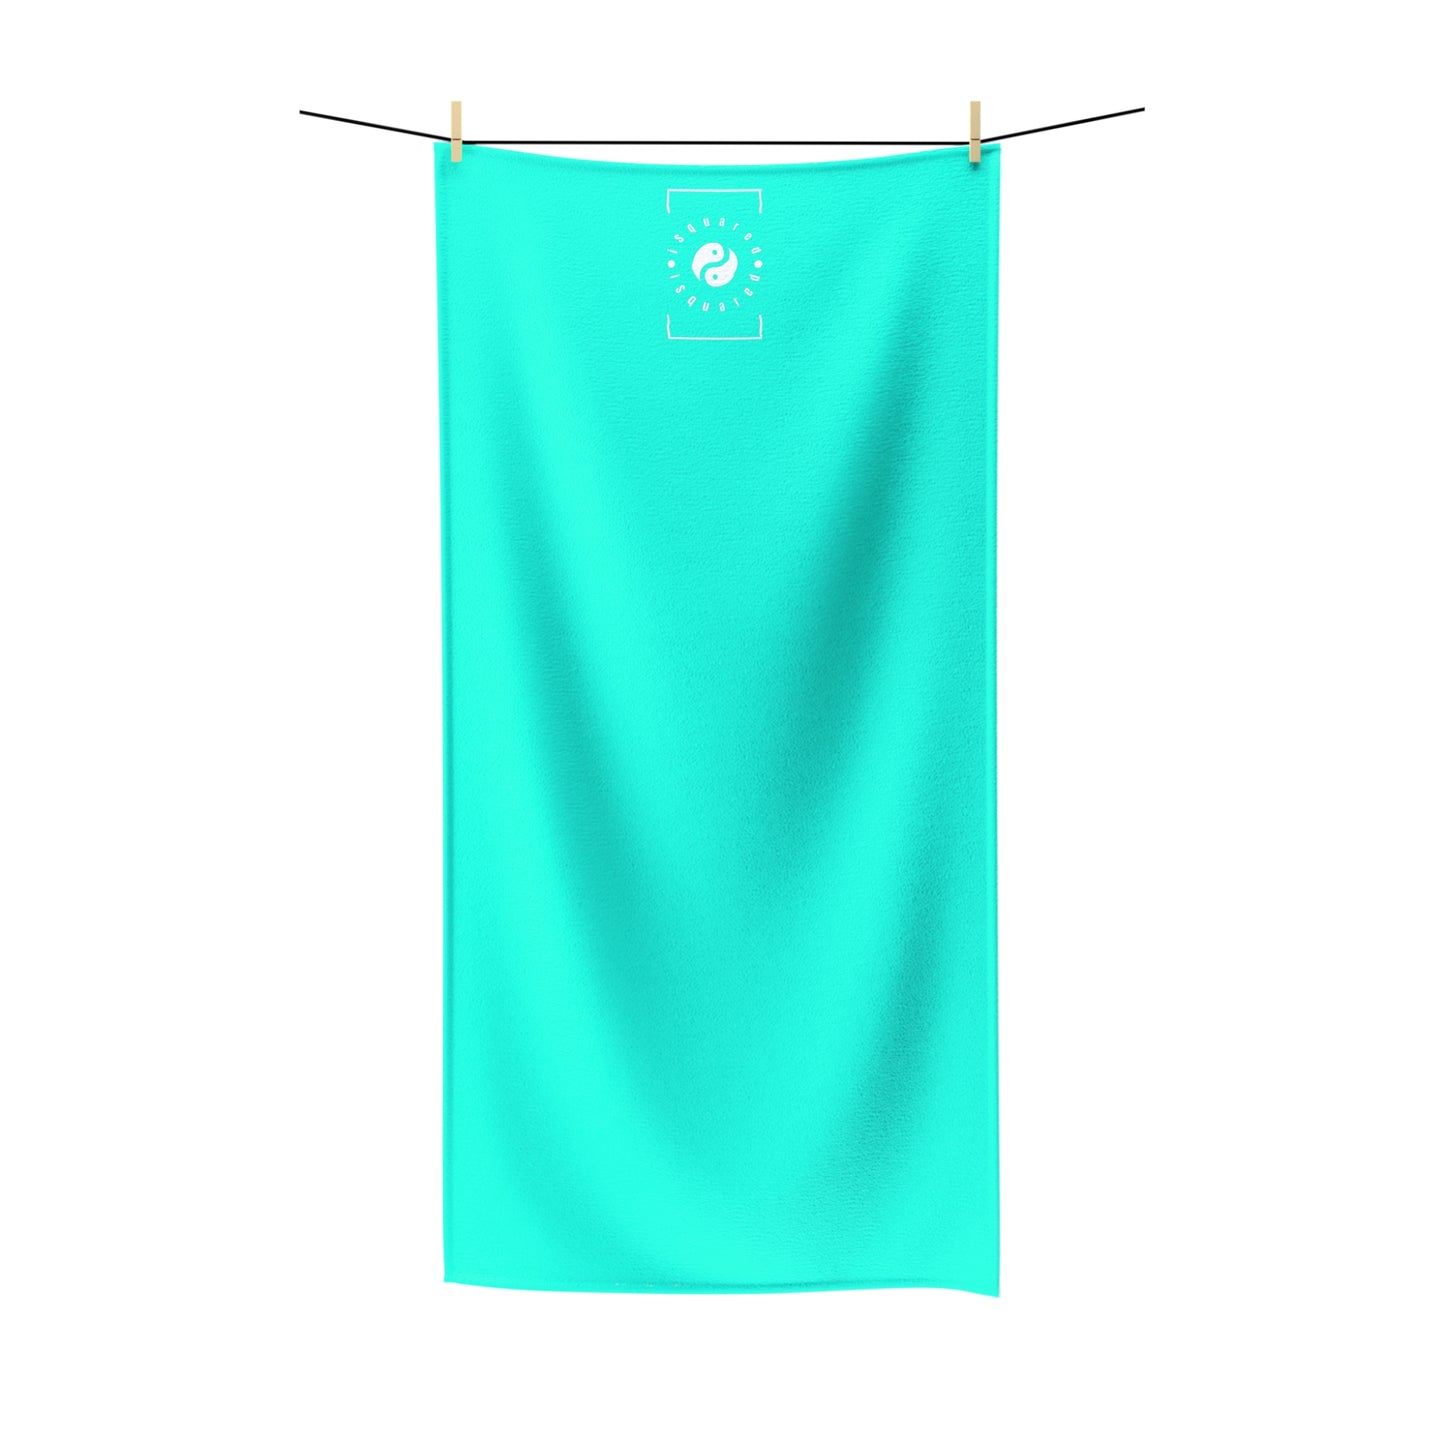 Neon Teal #11ffe3 - All Purpose Yoga Towel